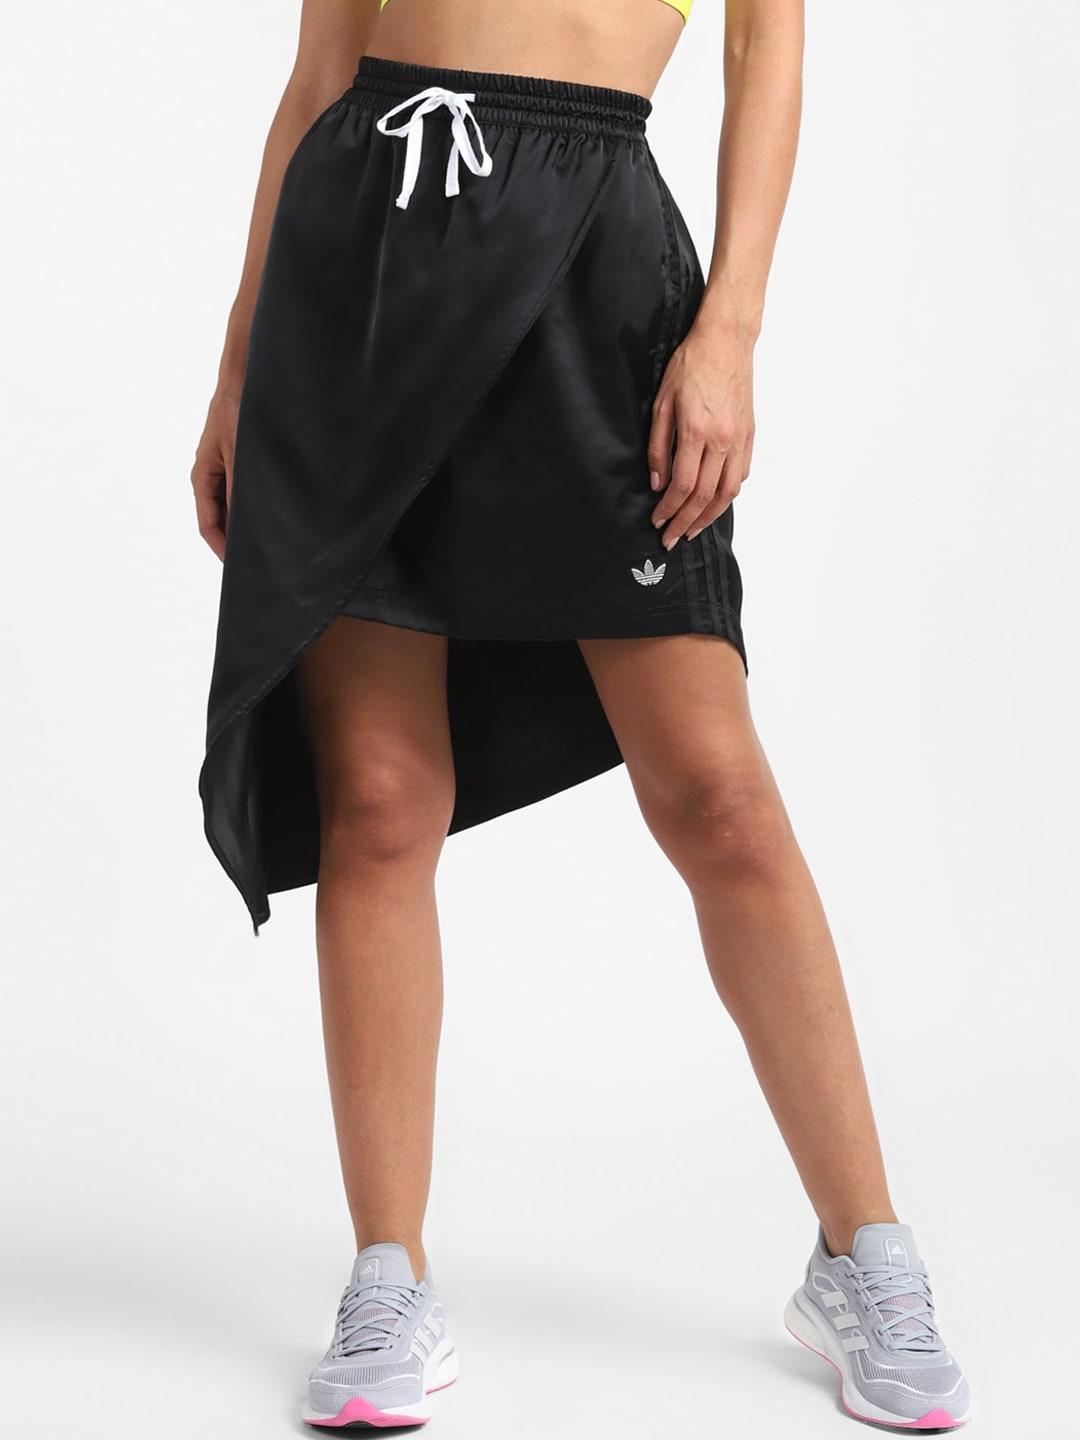 ADIDAS Originals Women Black Solid Mini Skirt